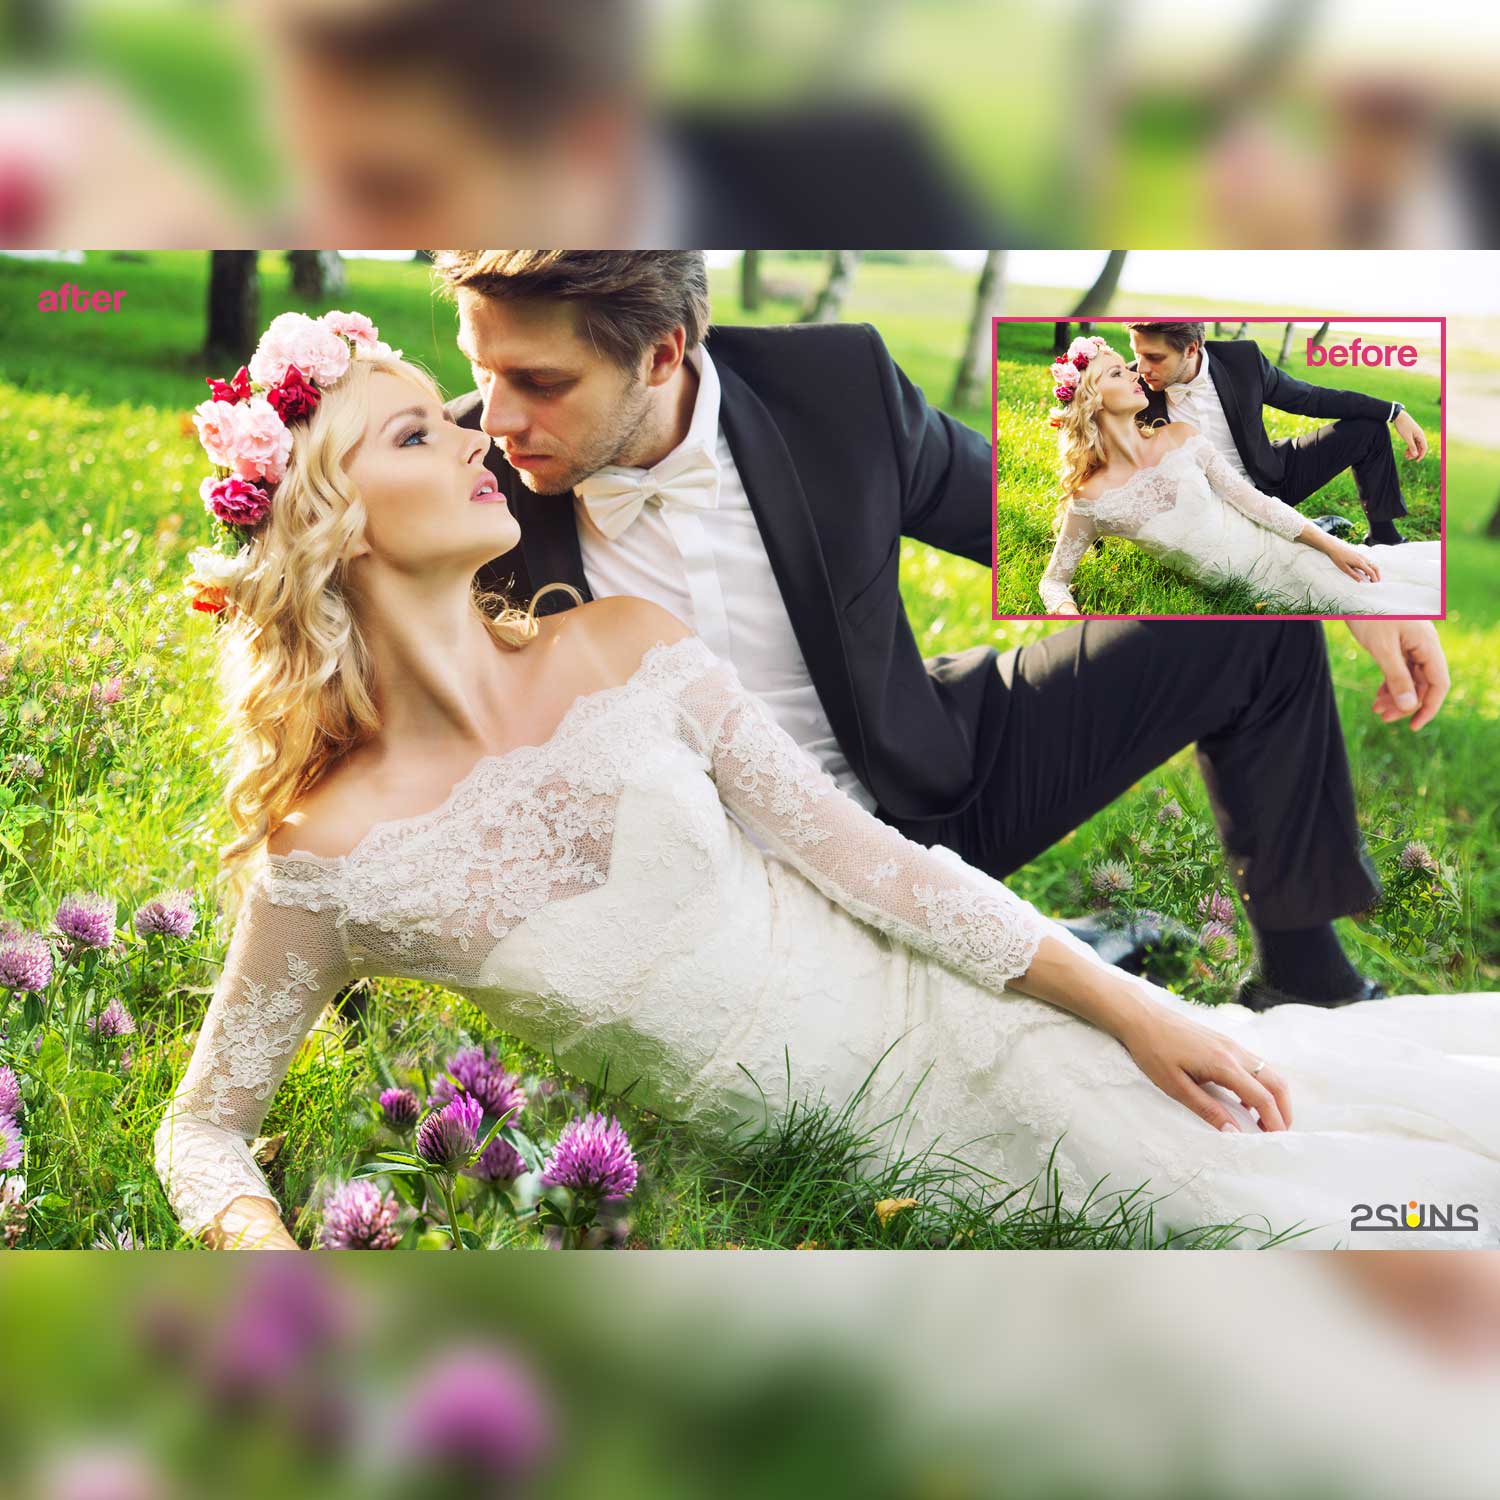 Digital Flower Backdrop Photoshop Overlay Wedding Photo Example.